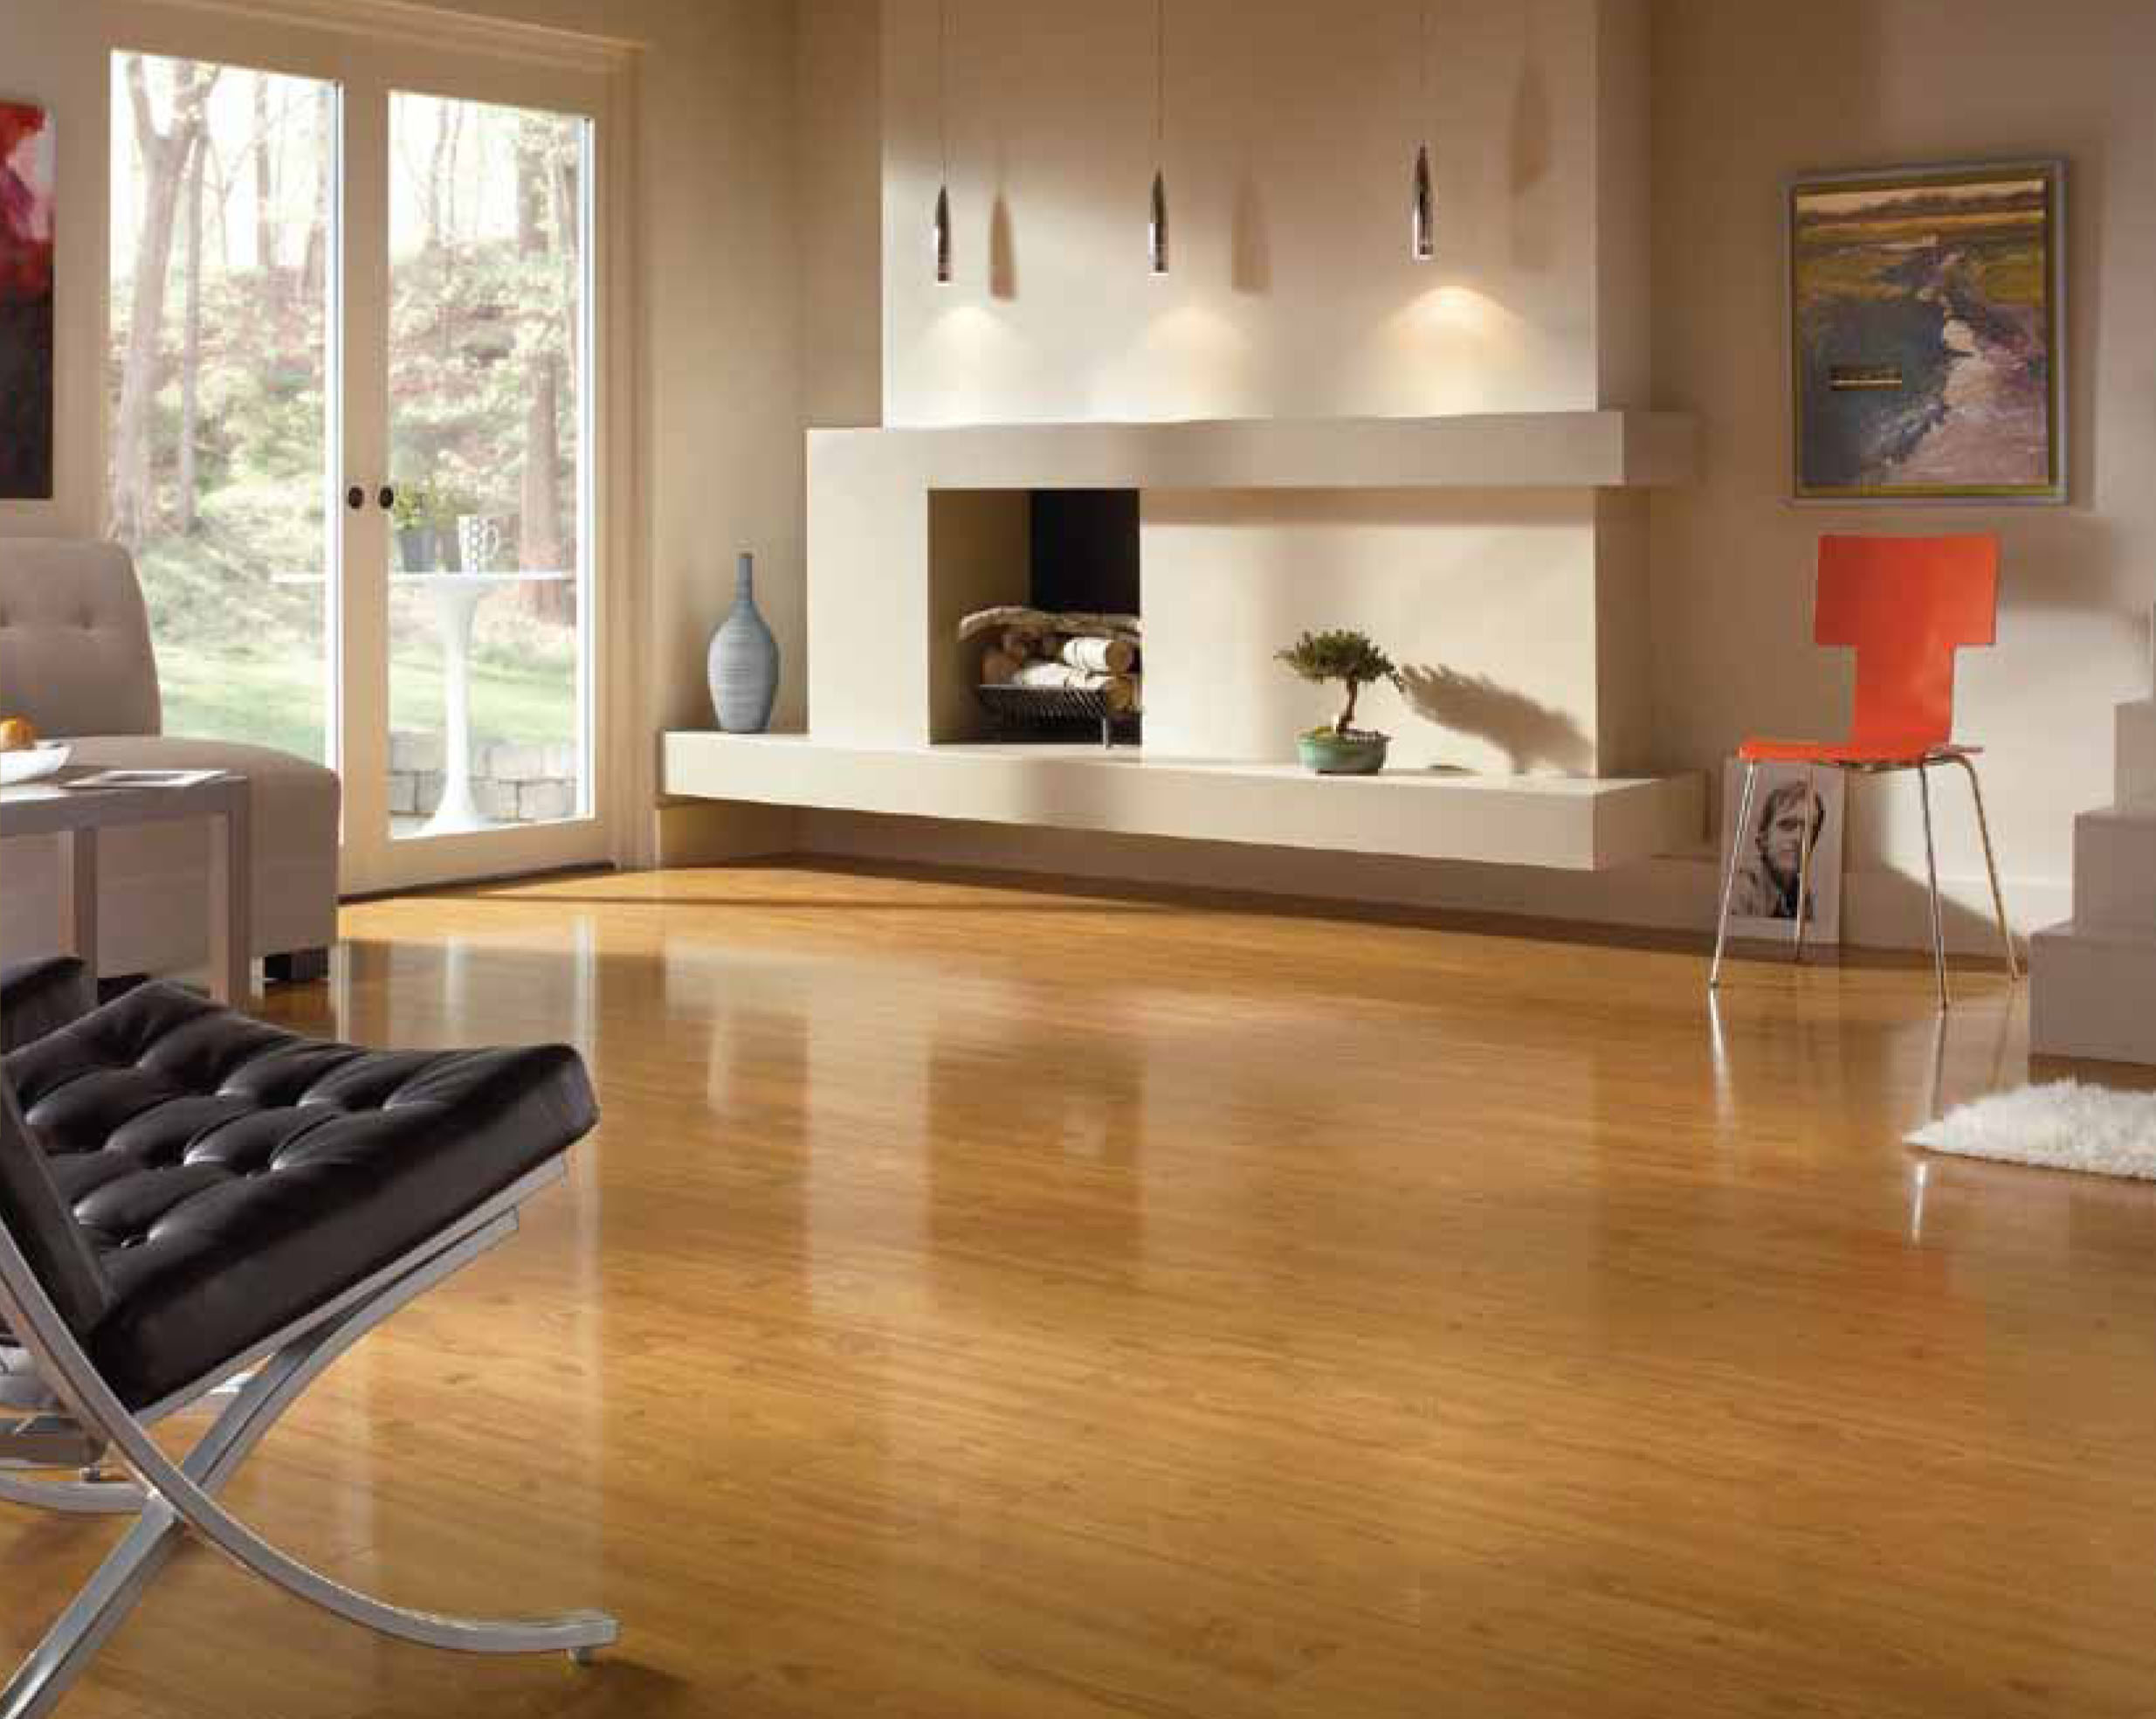 10 Laminated Wooden Flooring Ideas- The Sense Of Comfort. - Interior ...